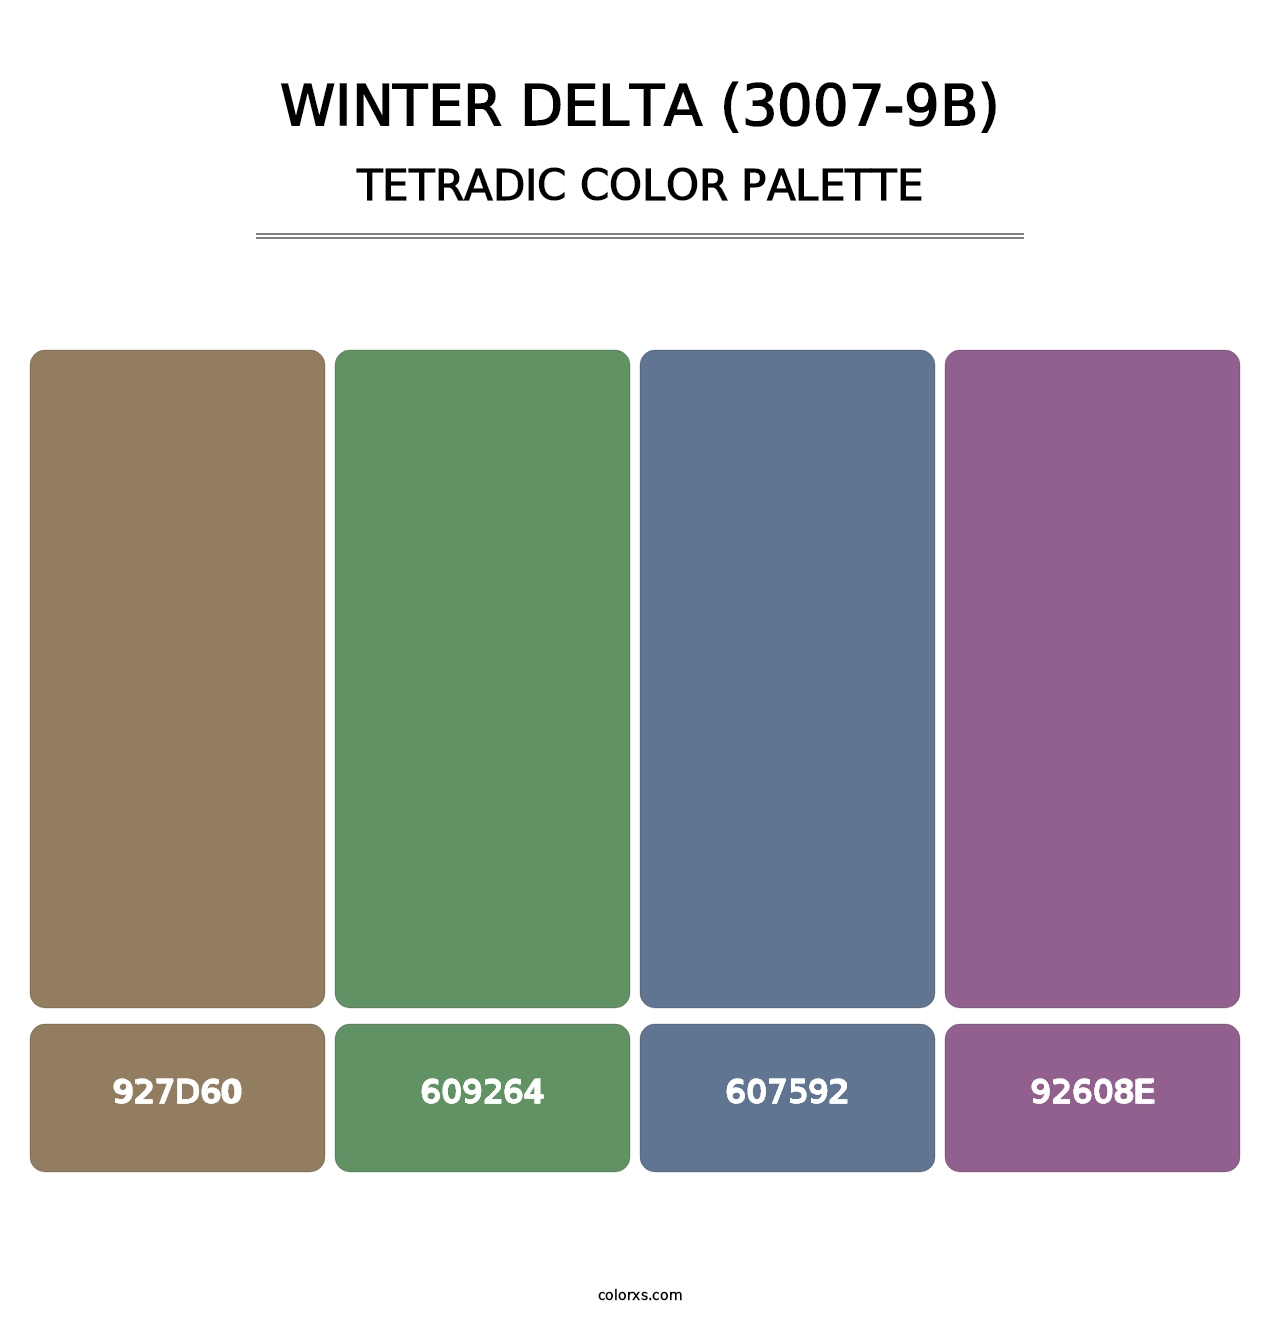 Winter Delta (3007-9B) - Tetradic Color Palette